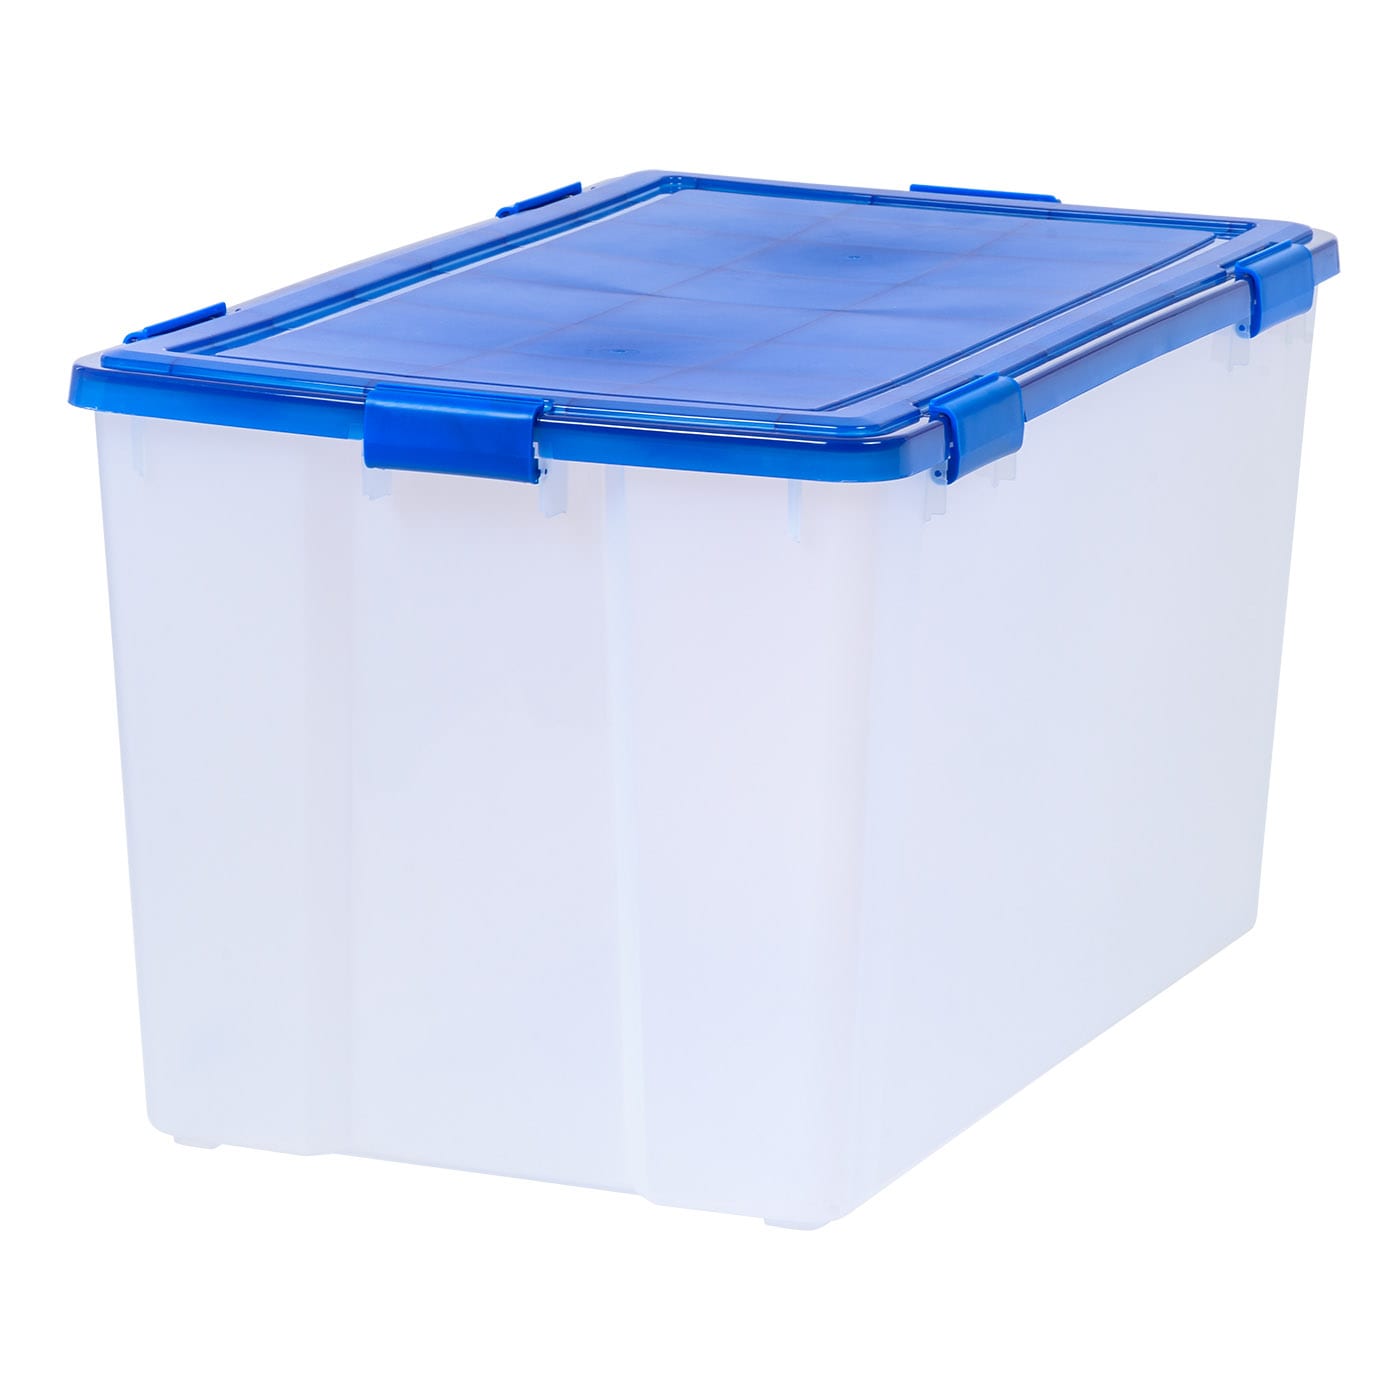 Iris USA, 156 Quart Weatherpro Gasket Clear Plastic Storage Box with Blue Lid